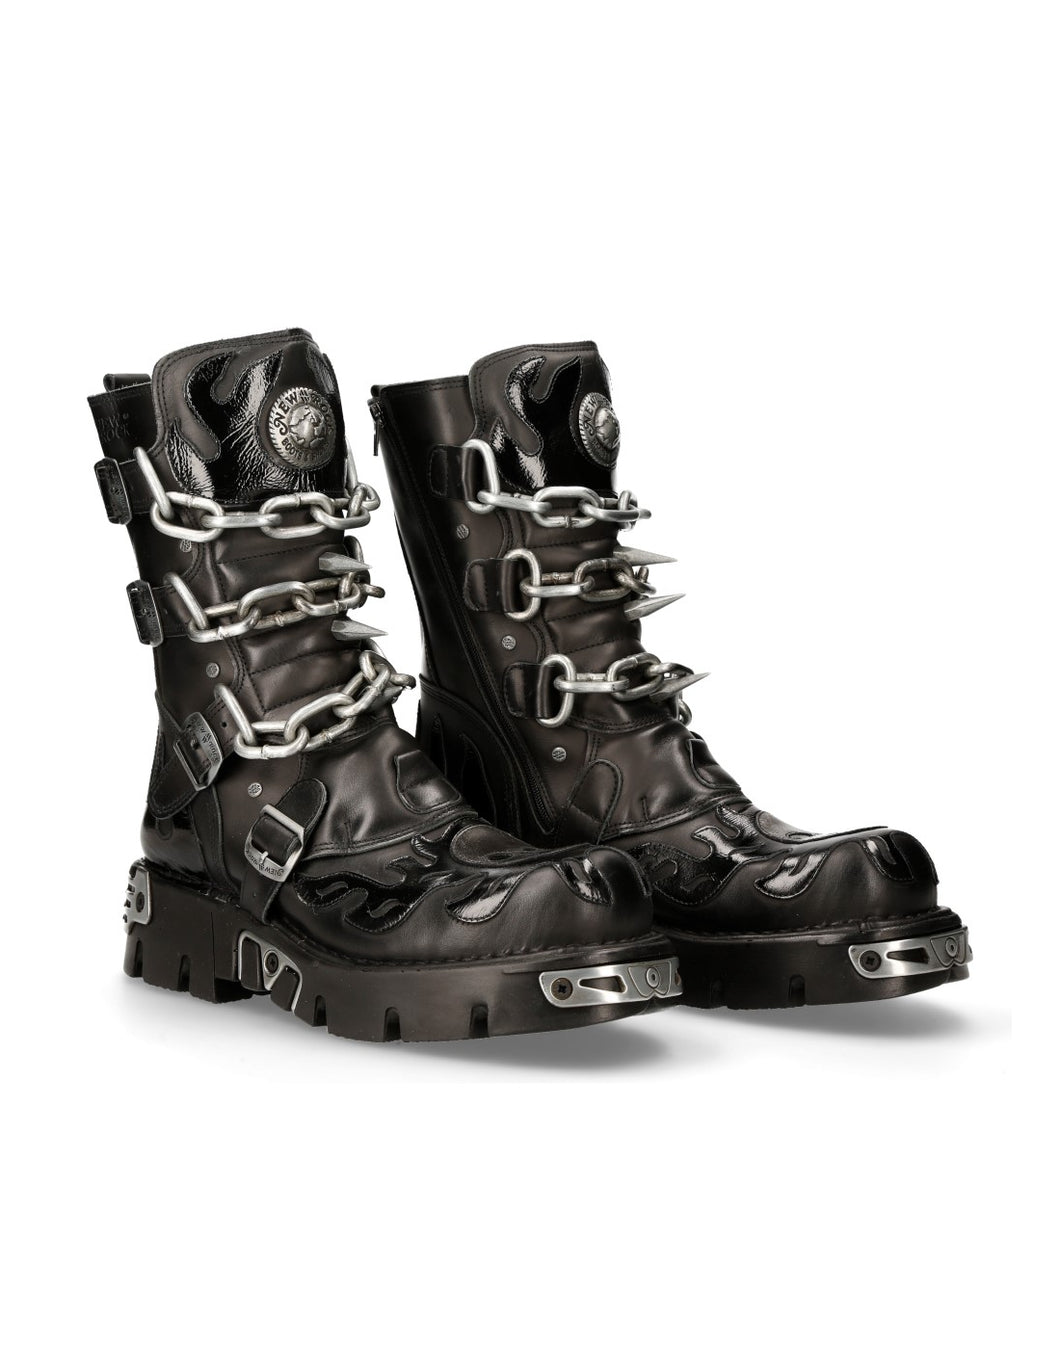 New Rock Schuhe Shoes Boots Stiefel M.727-S1 Bikerstiefel Gothic Echtleder Totenkopf Skull mit Ketten